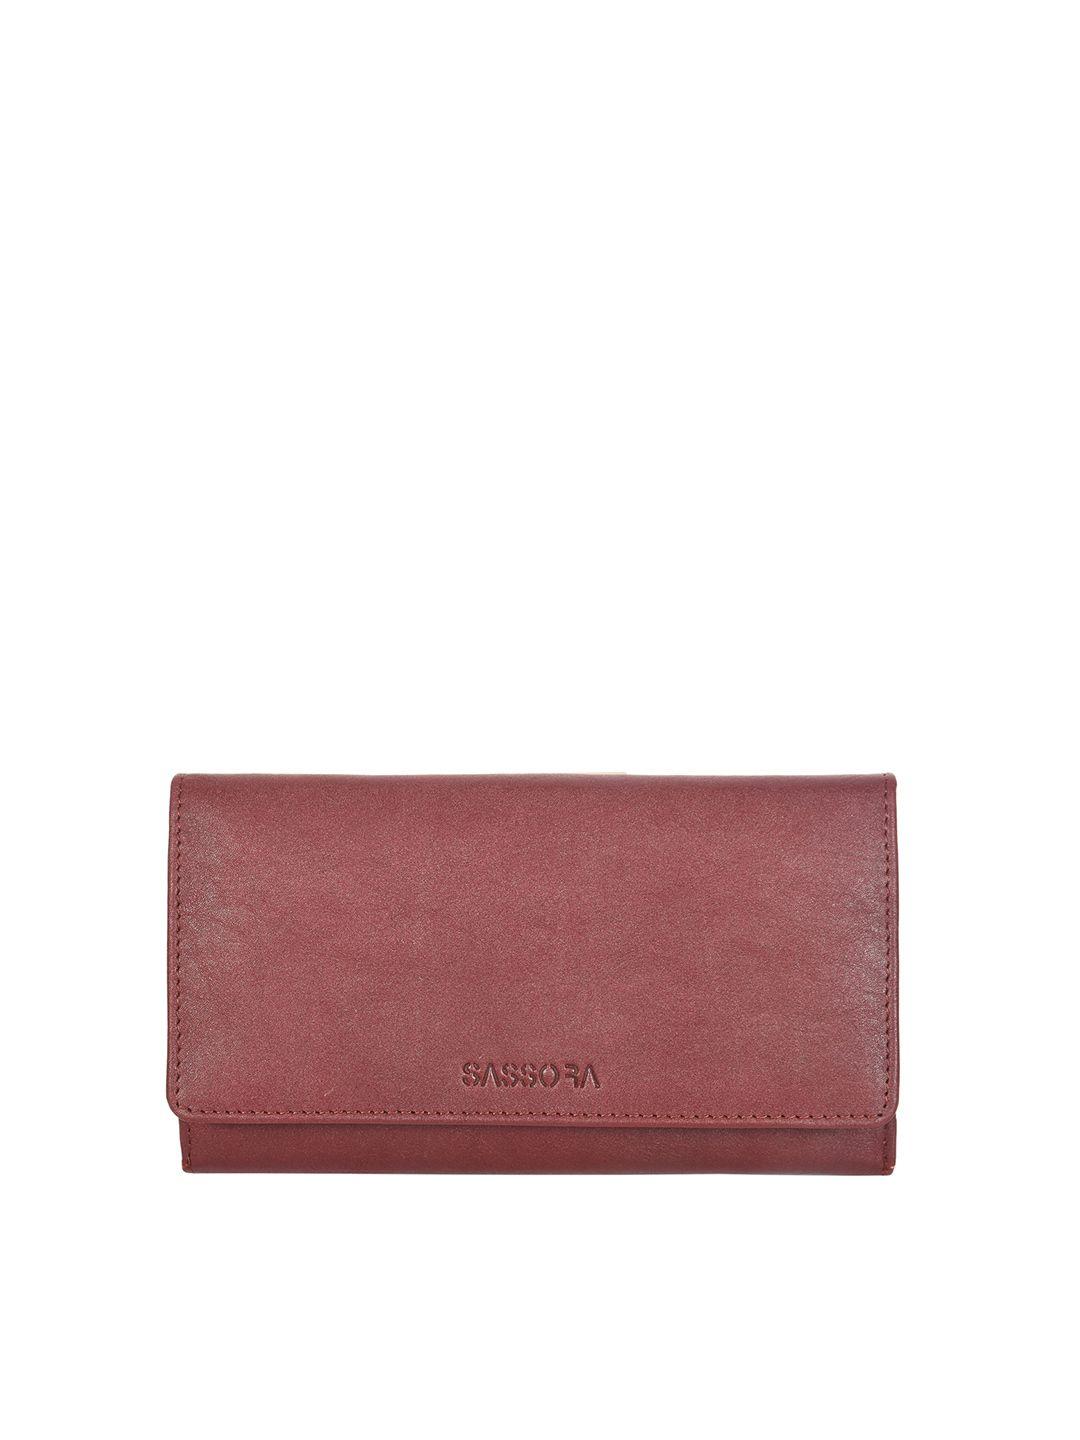 sassora women red & white zip detail leather two fold wallet